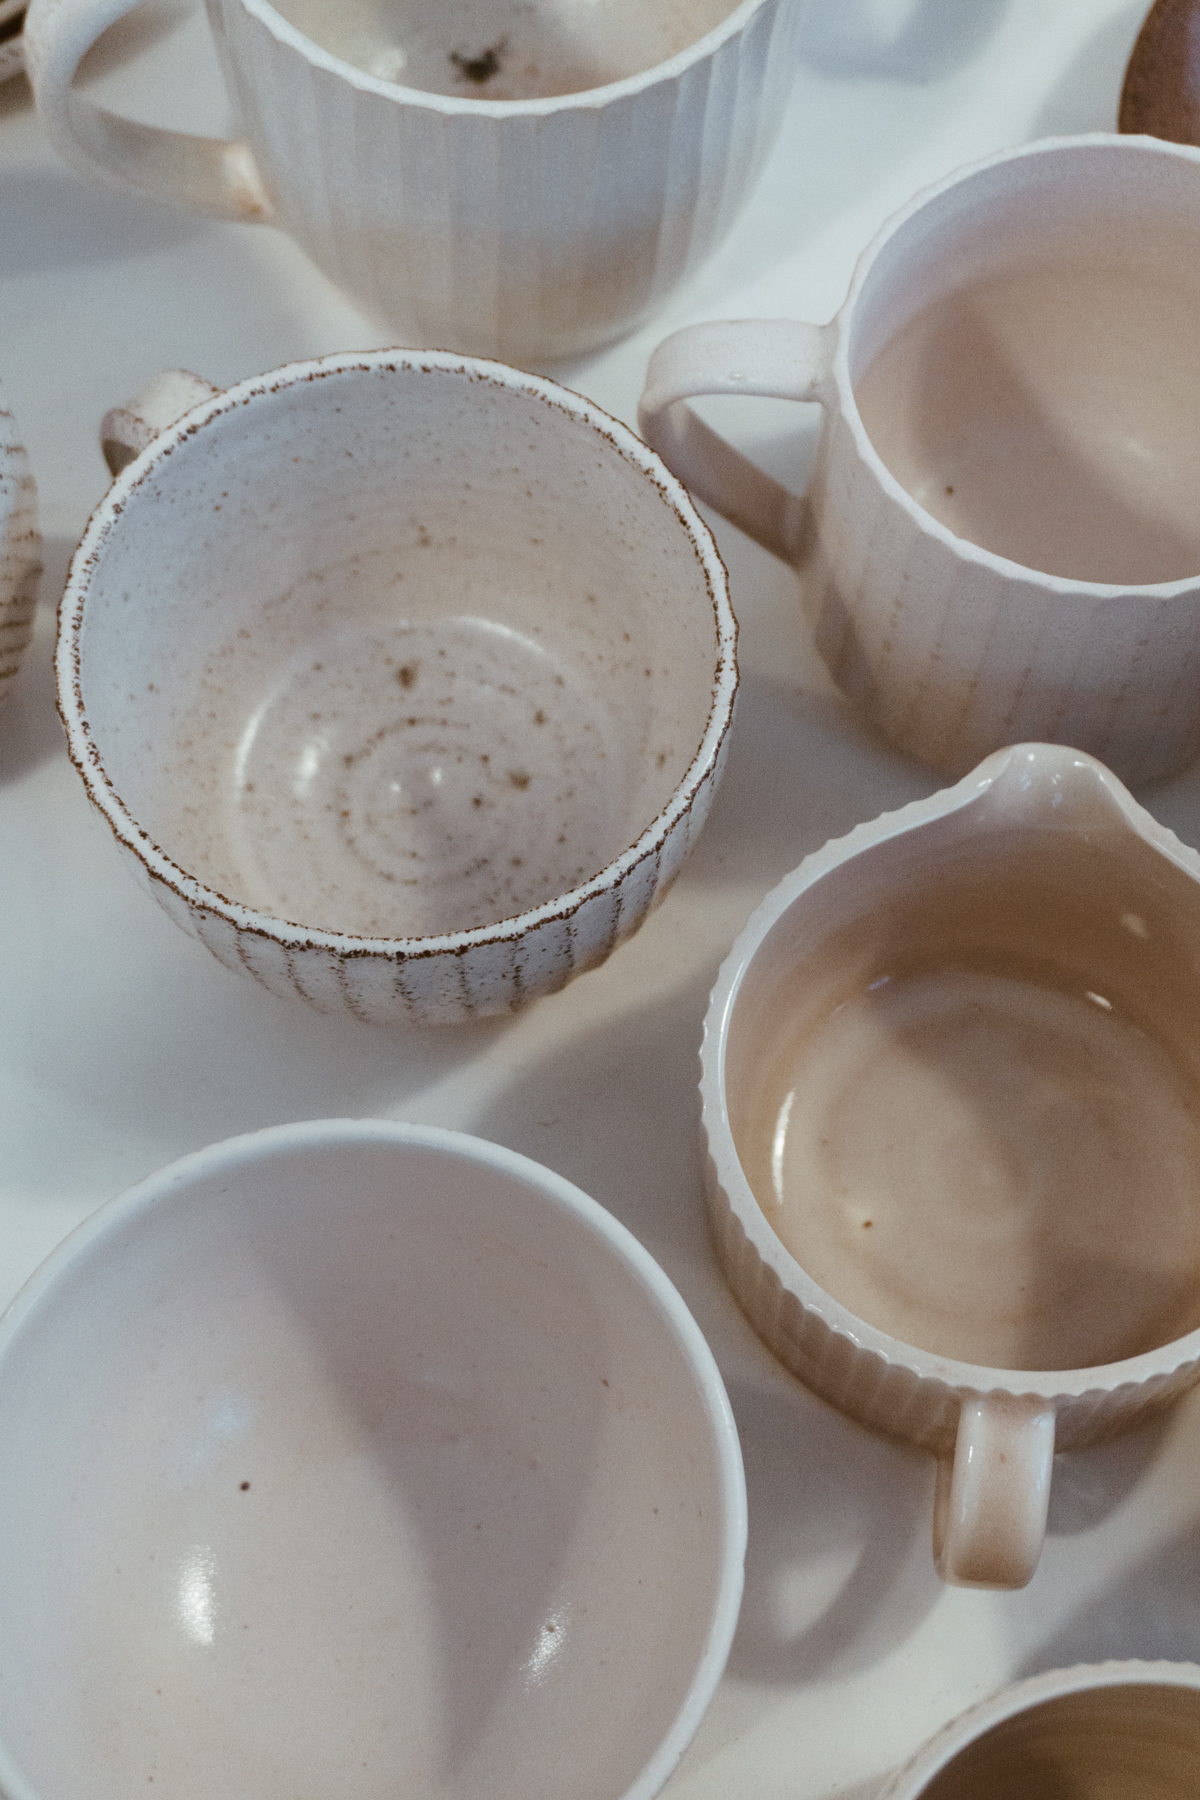 Robynn Storgaard - Danish Ceramics Studio Copenhagen - Minimalist Style / RG Daily Blog